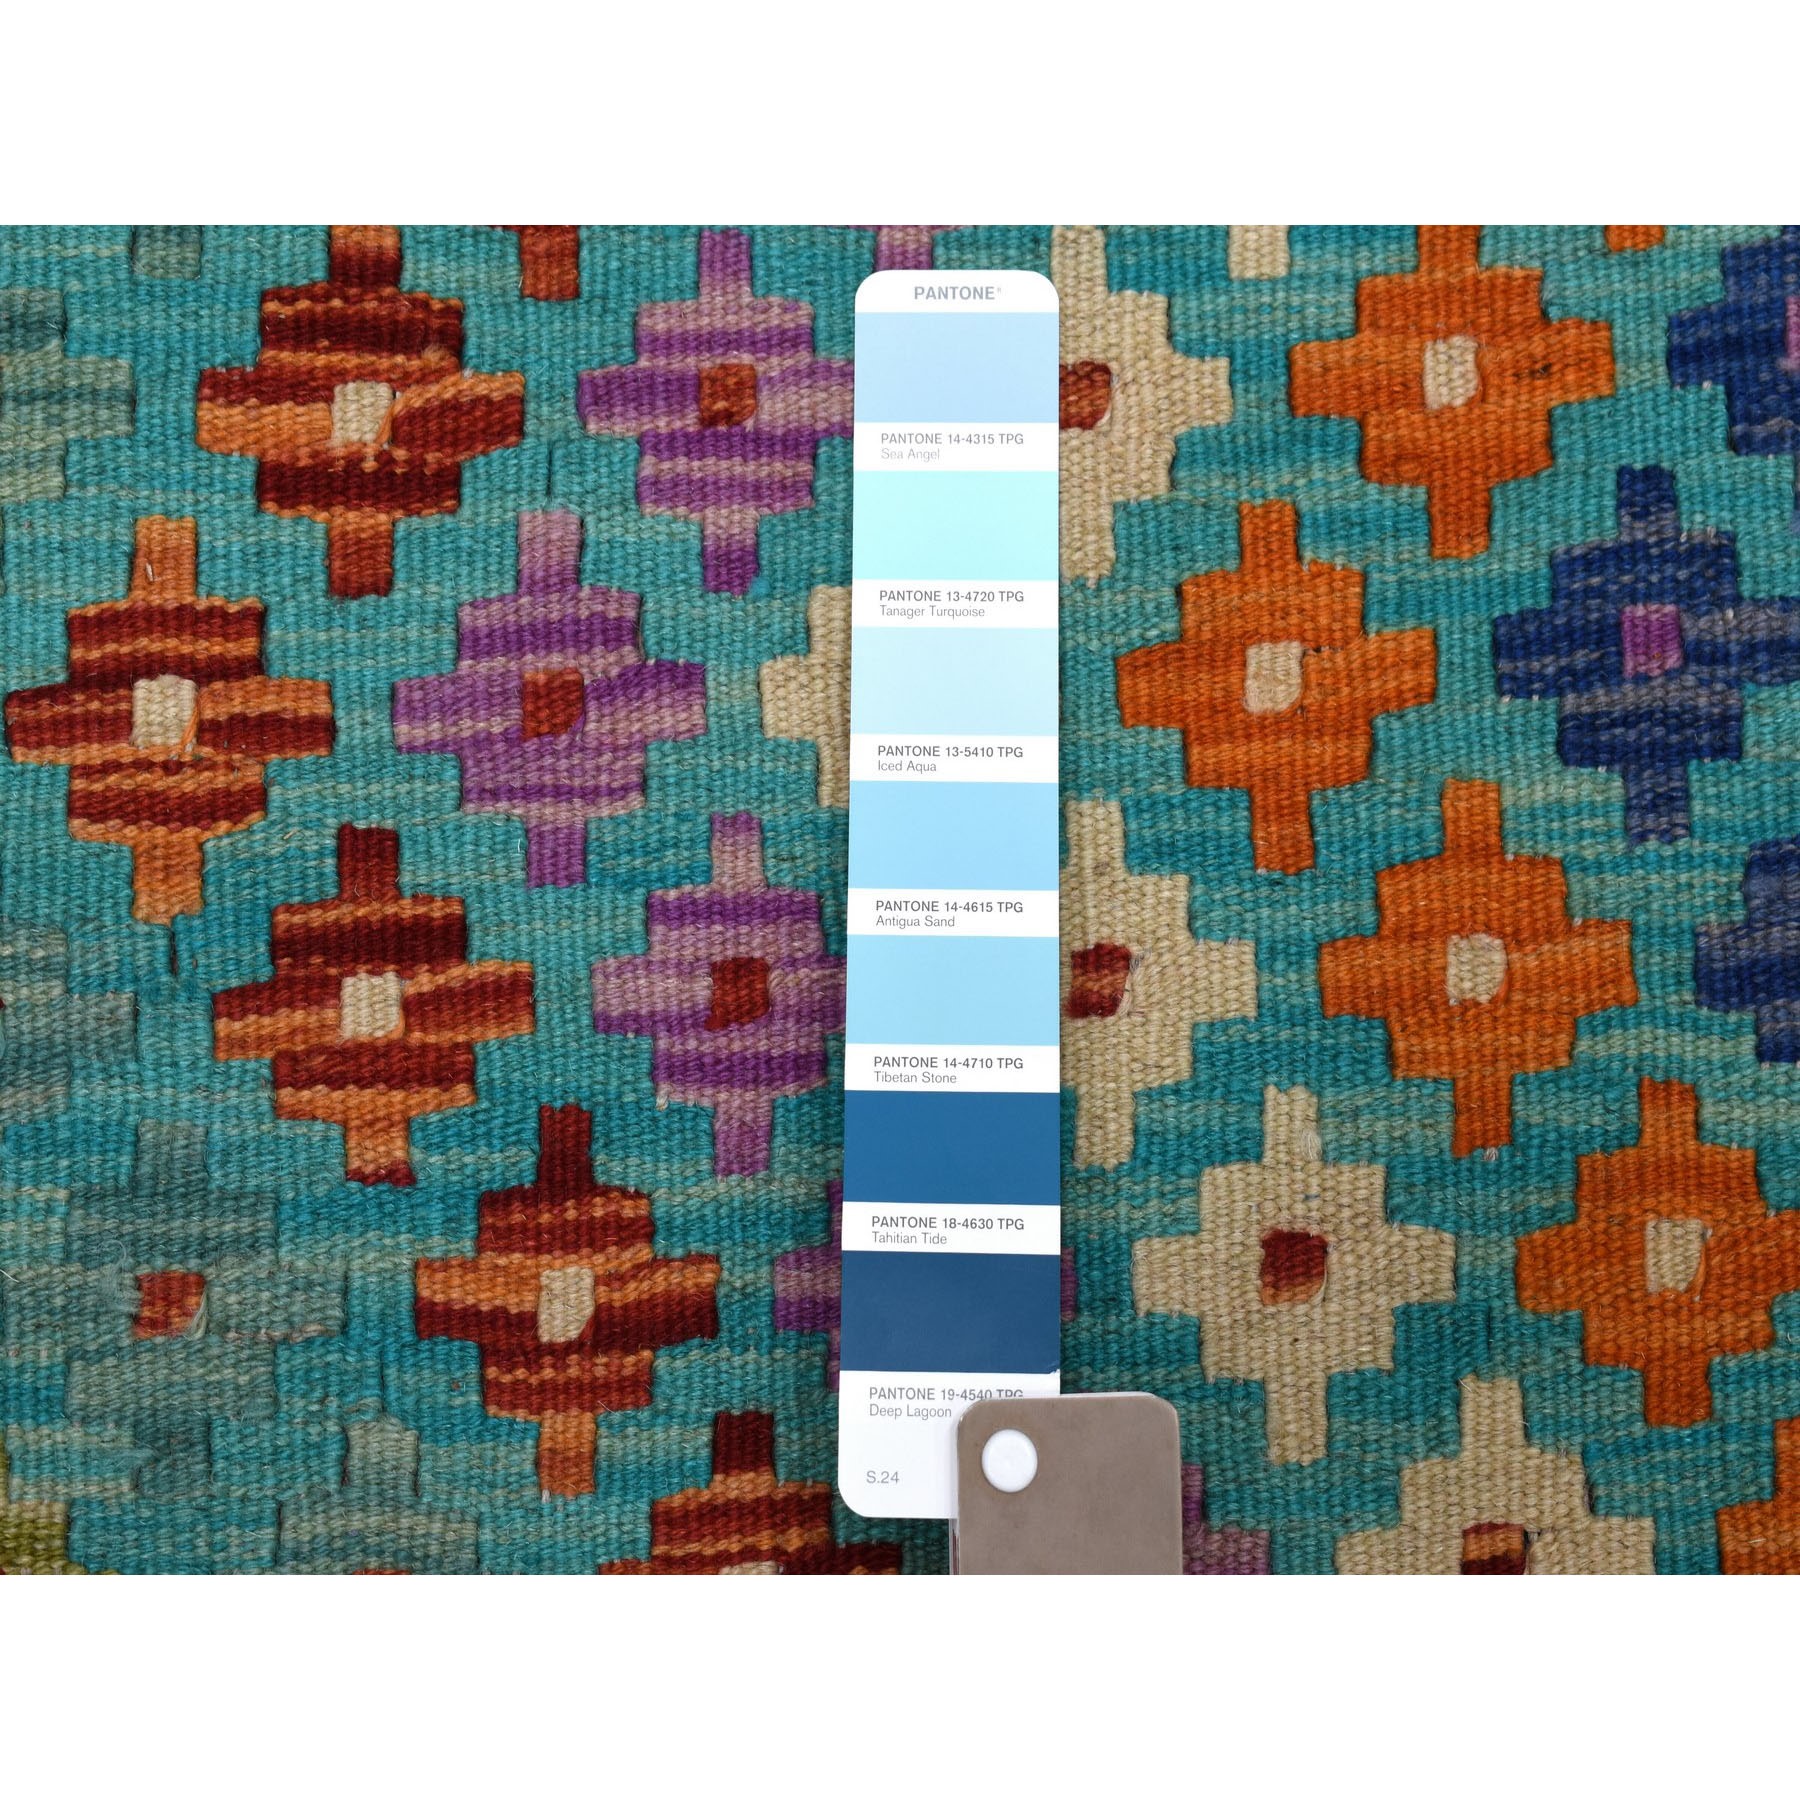 10-2 x13-1  Colorful Afghan Kilim Pure Wool Hand Woven Oriental Rug 